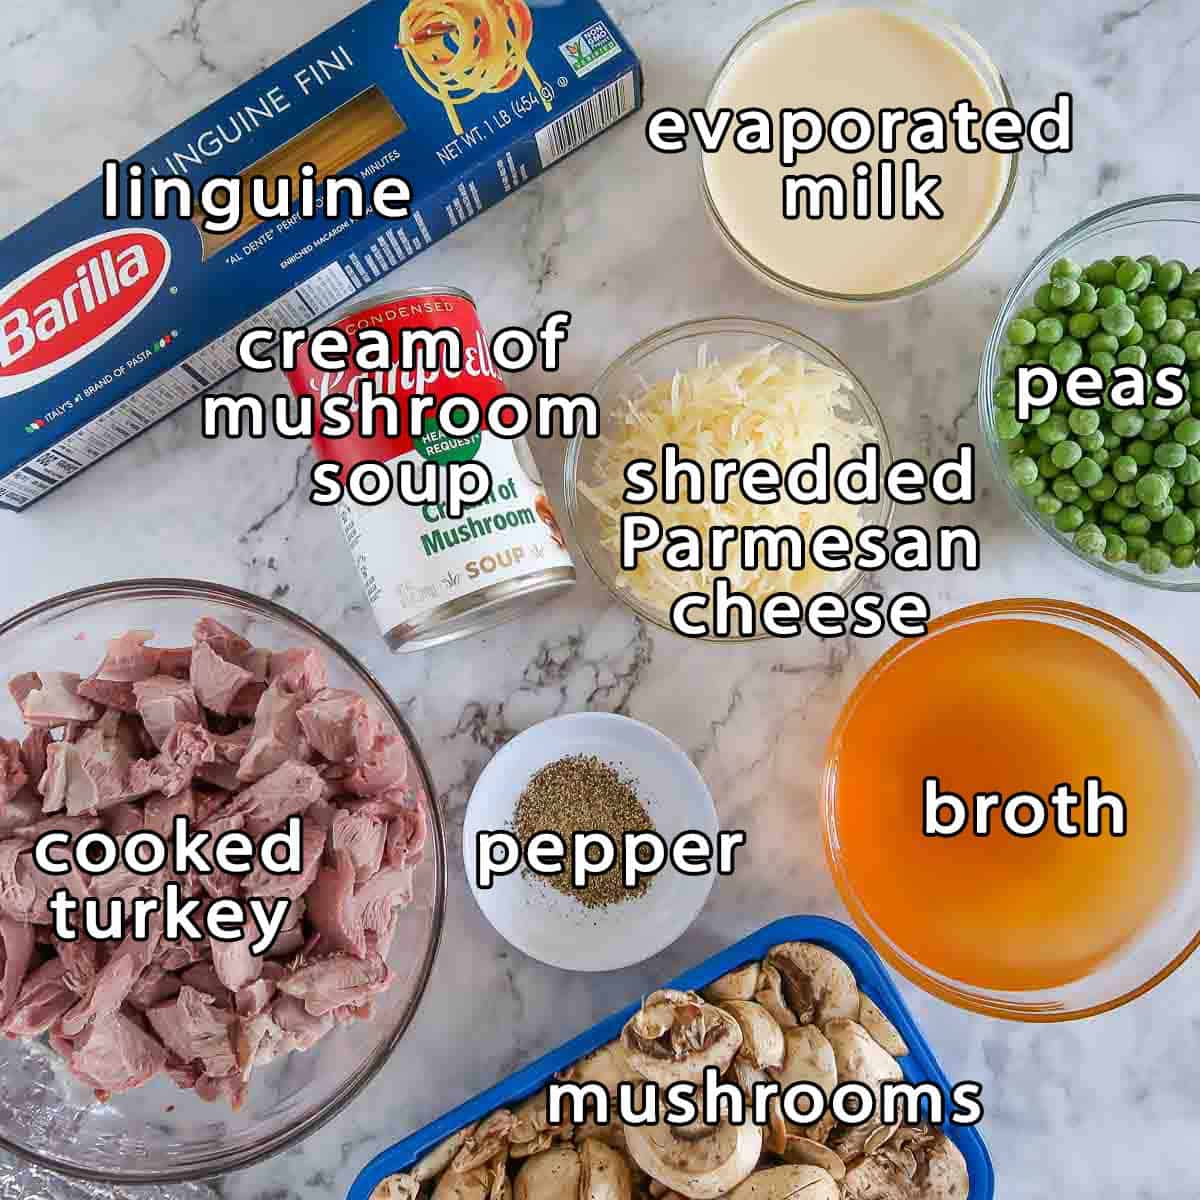 Overhead shot of ingredients - linguine, evaporated milk, cream of mushroom soup, shredded parmesan cheese, peas, broth, pepper, cooked turkey, and mushrooms.